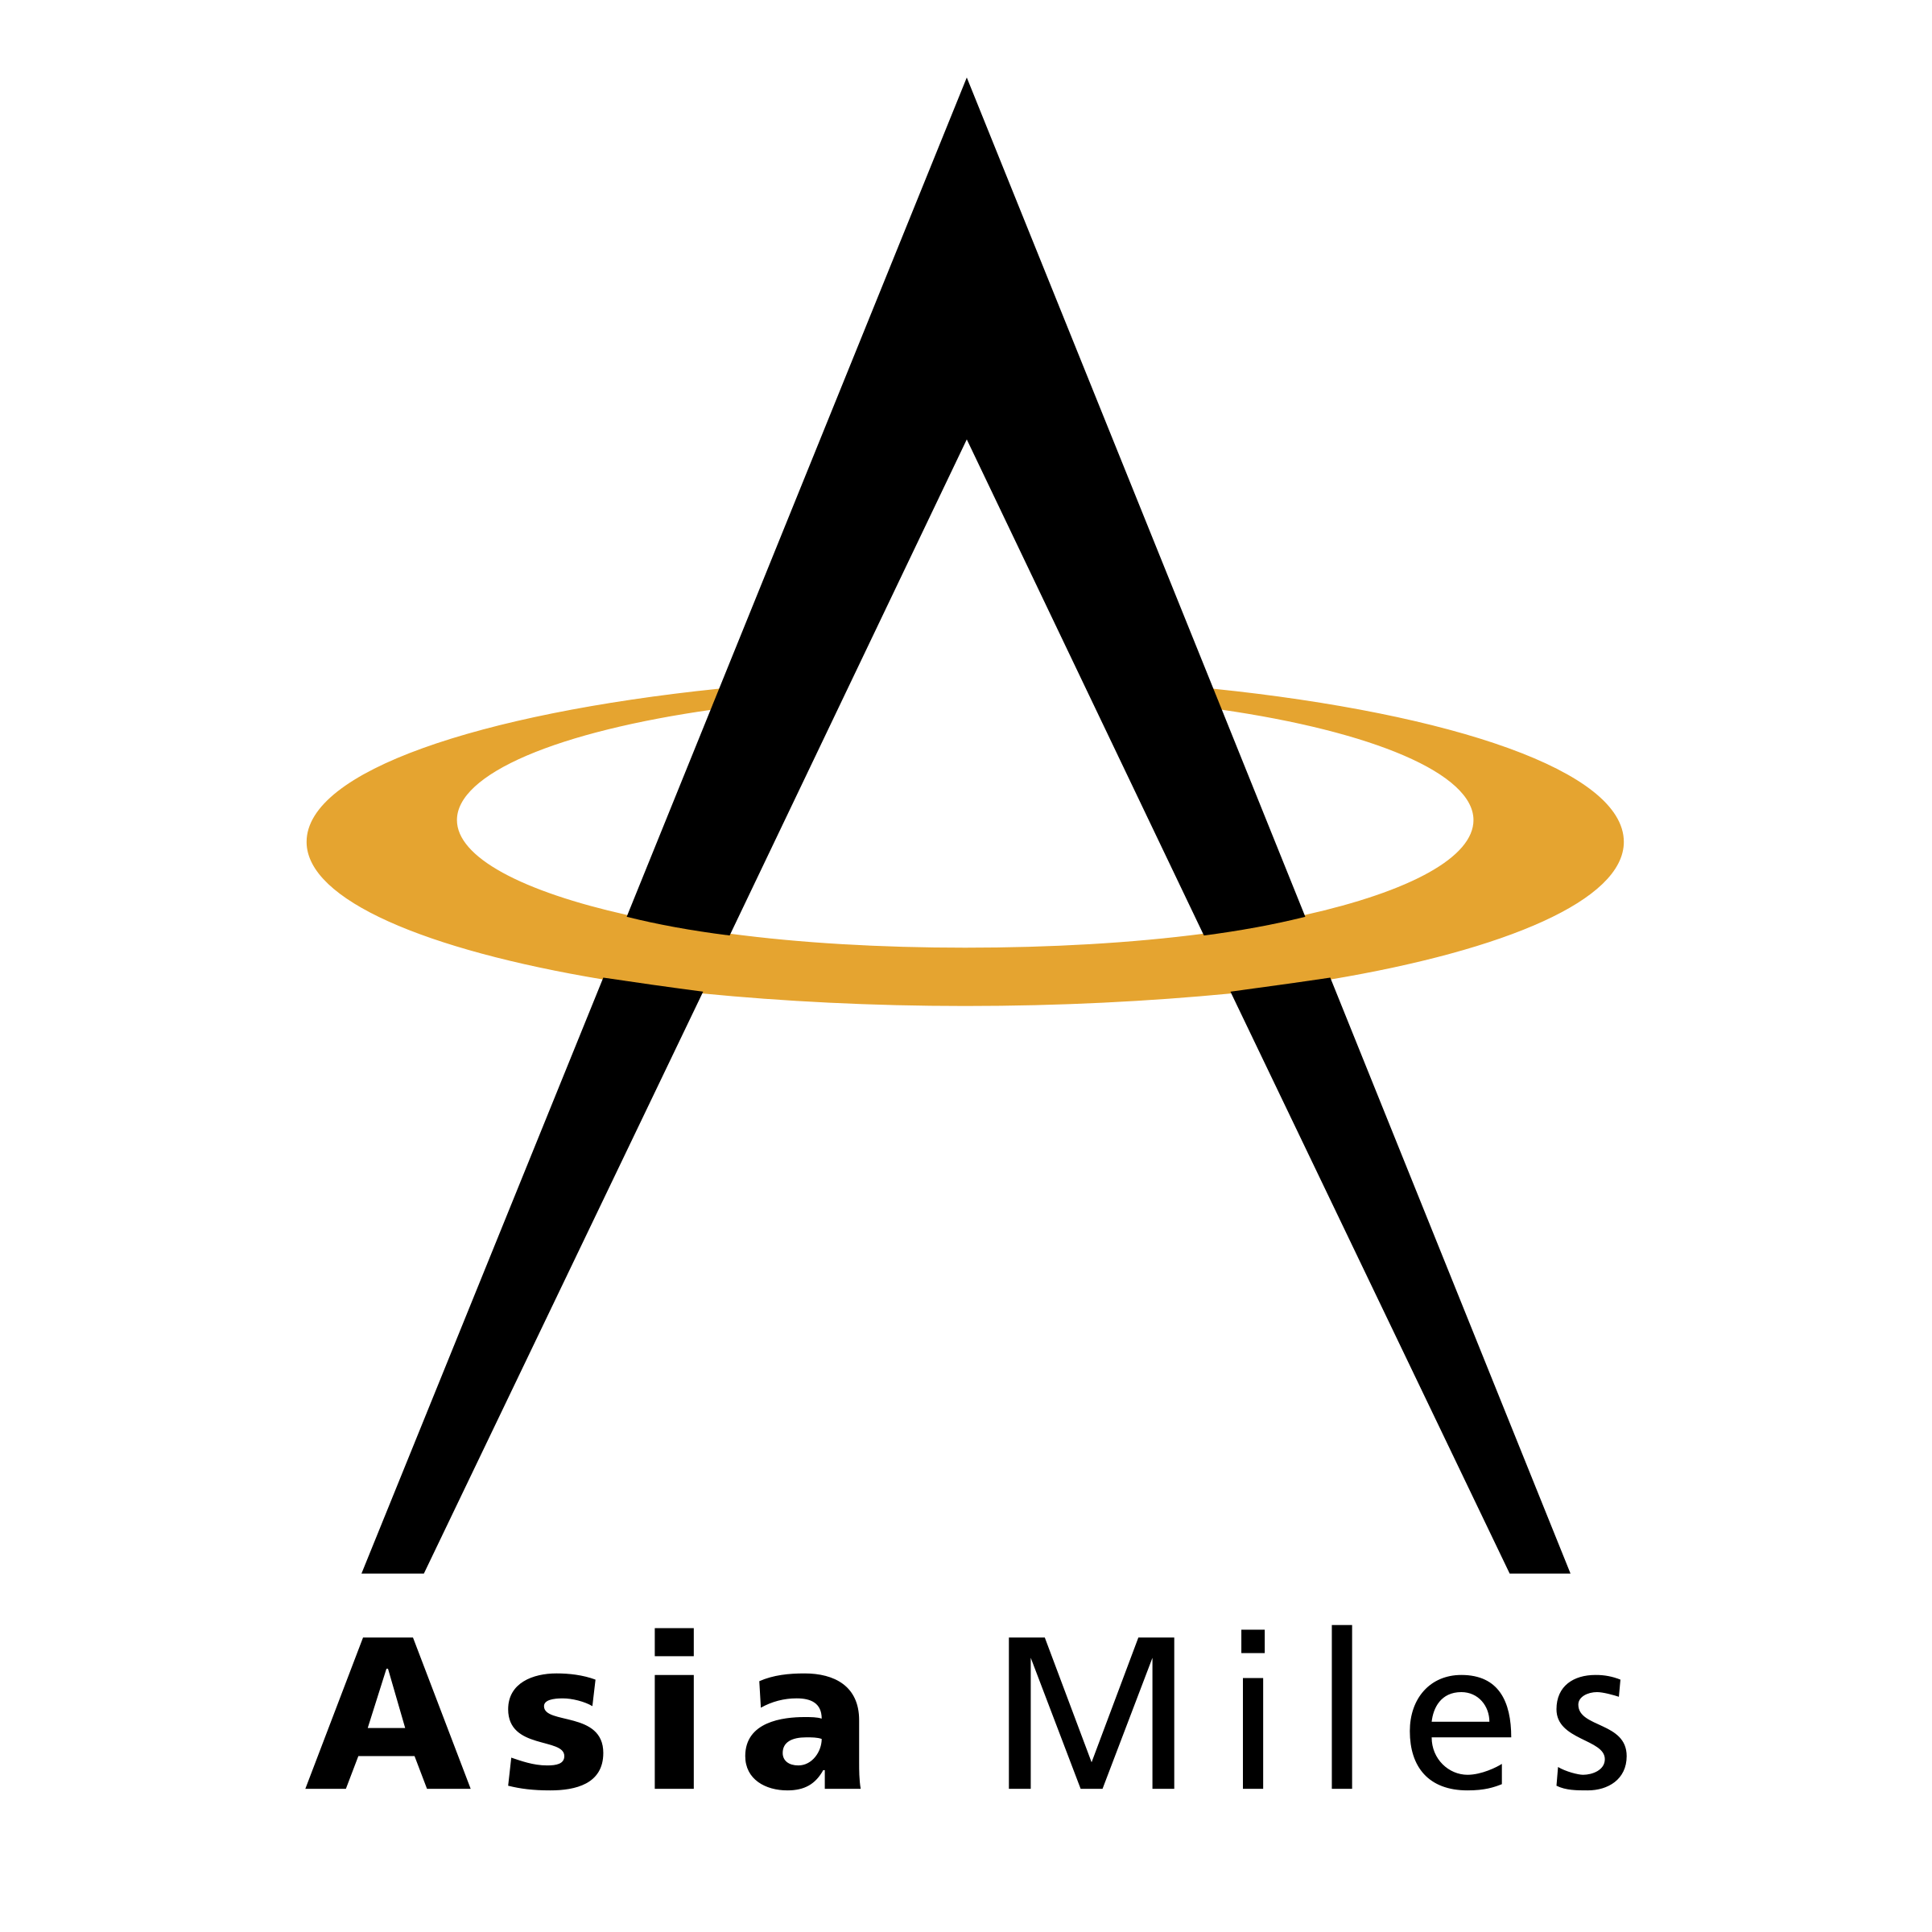 Miles Logo - Asia Miles Logo PNG Transparent & SVG Vector - Freebie Supply